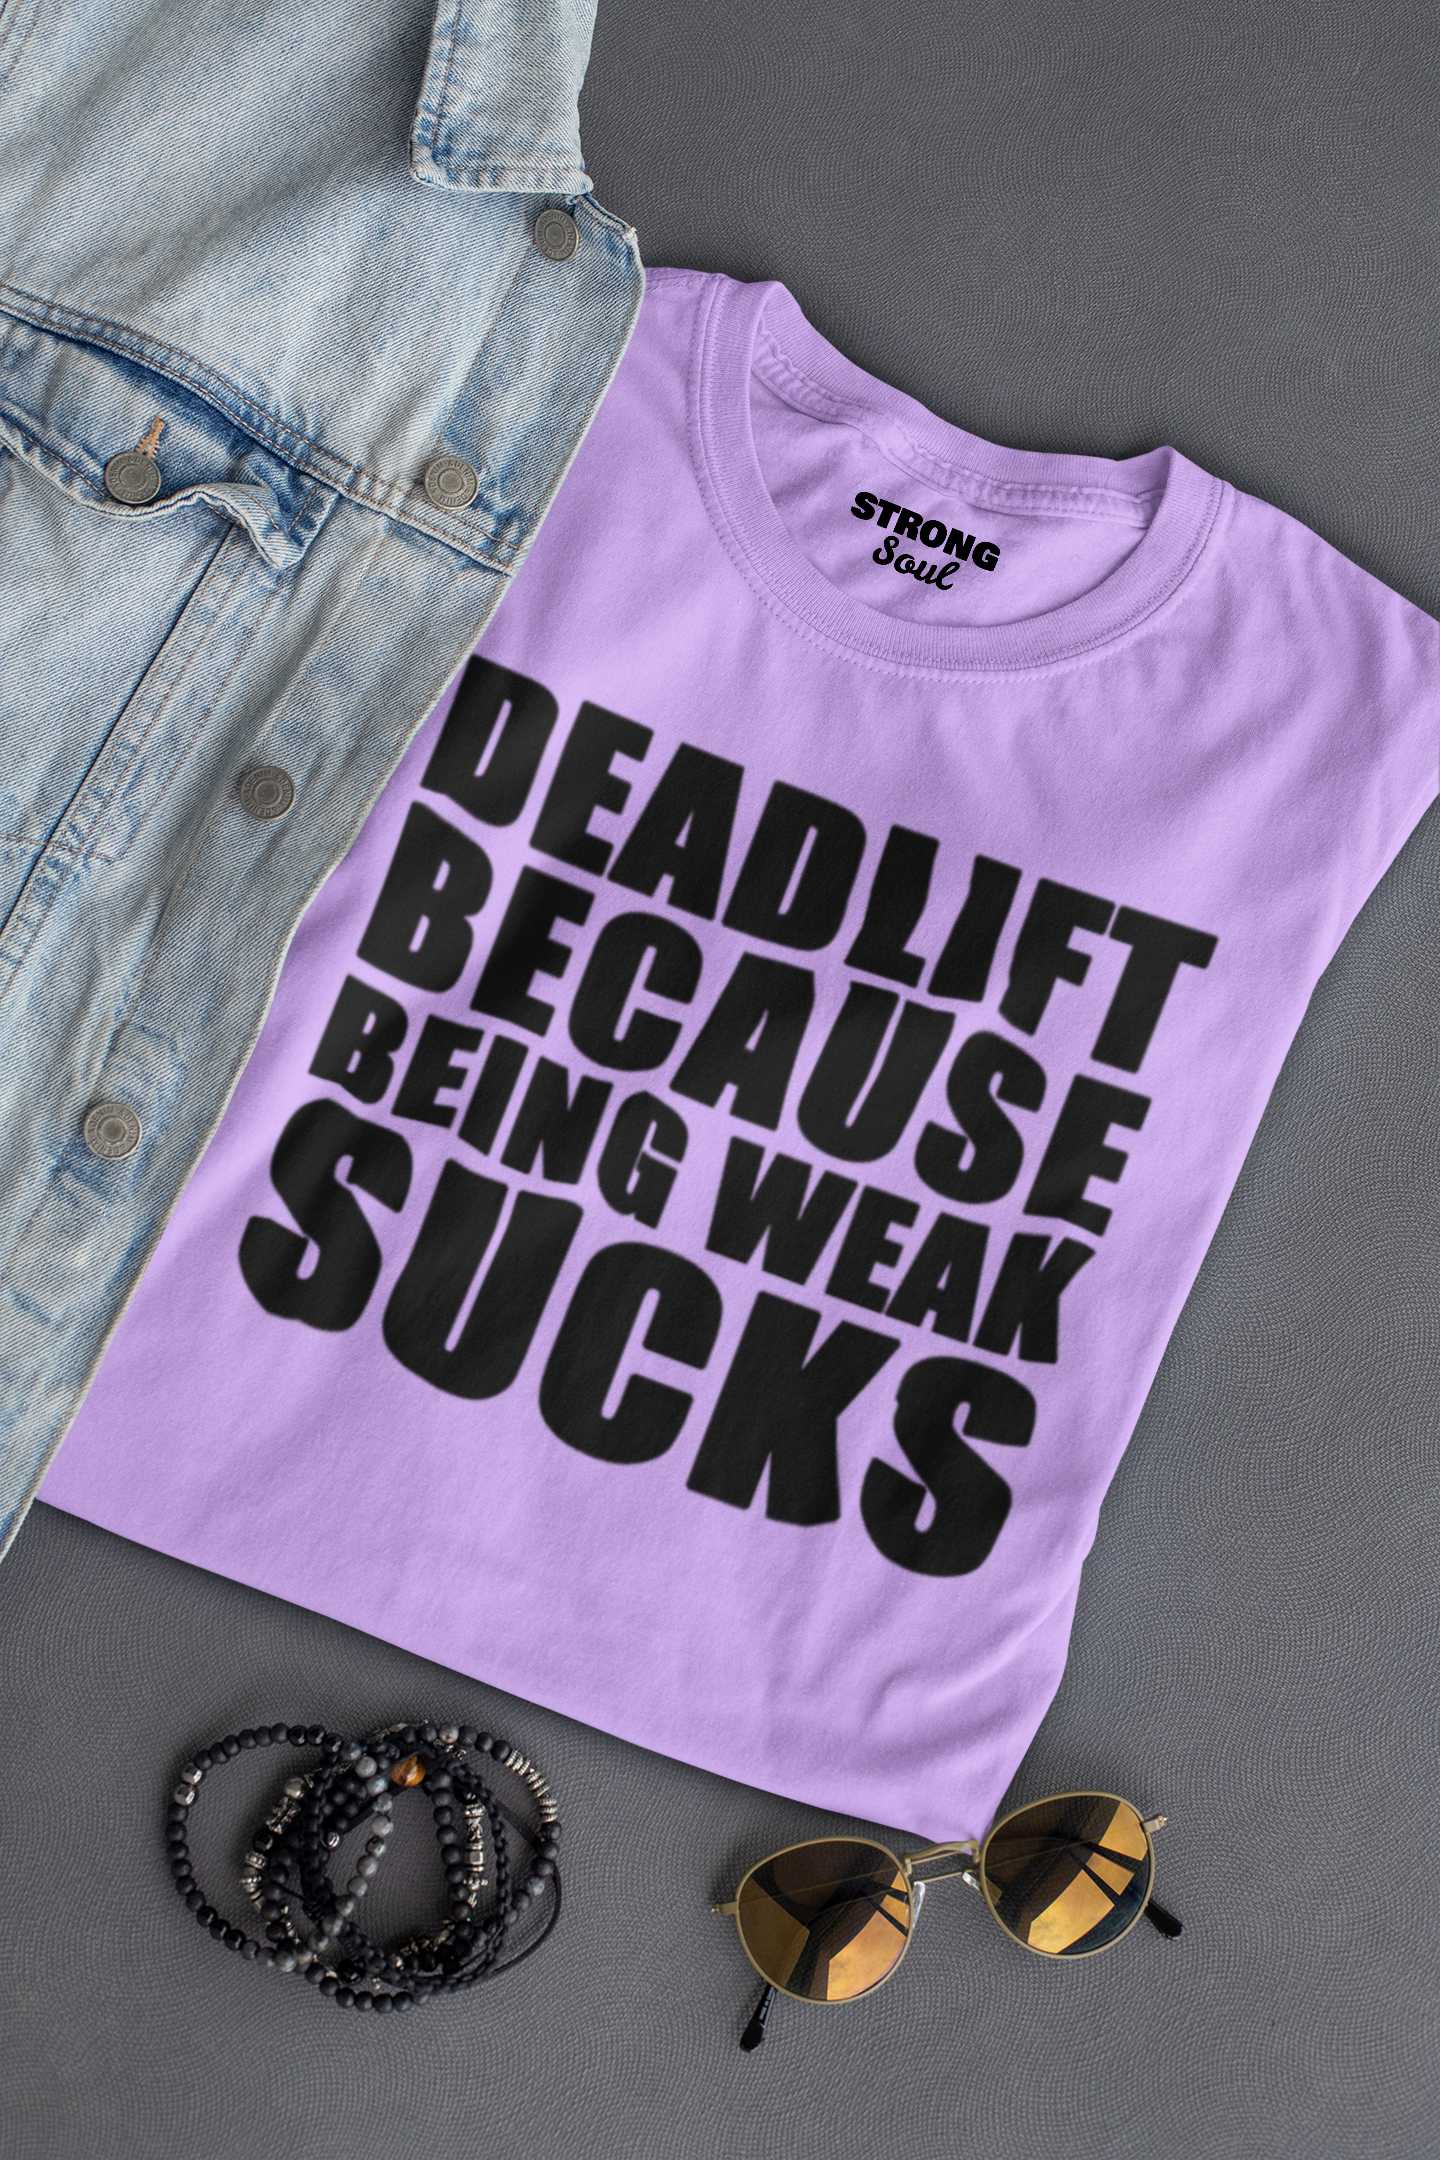 Deadlift Because Being Weak Sucks - Gym T Shirt Strong Soul Shirts & Tops